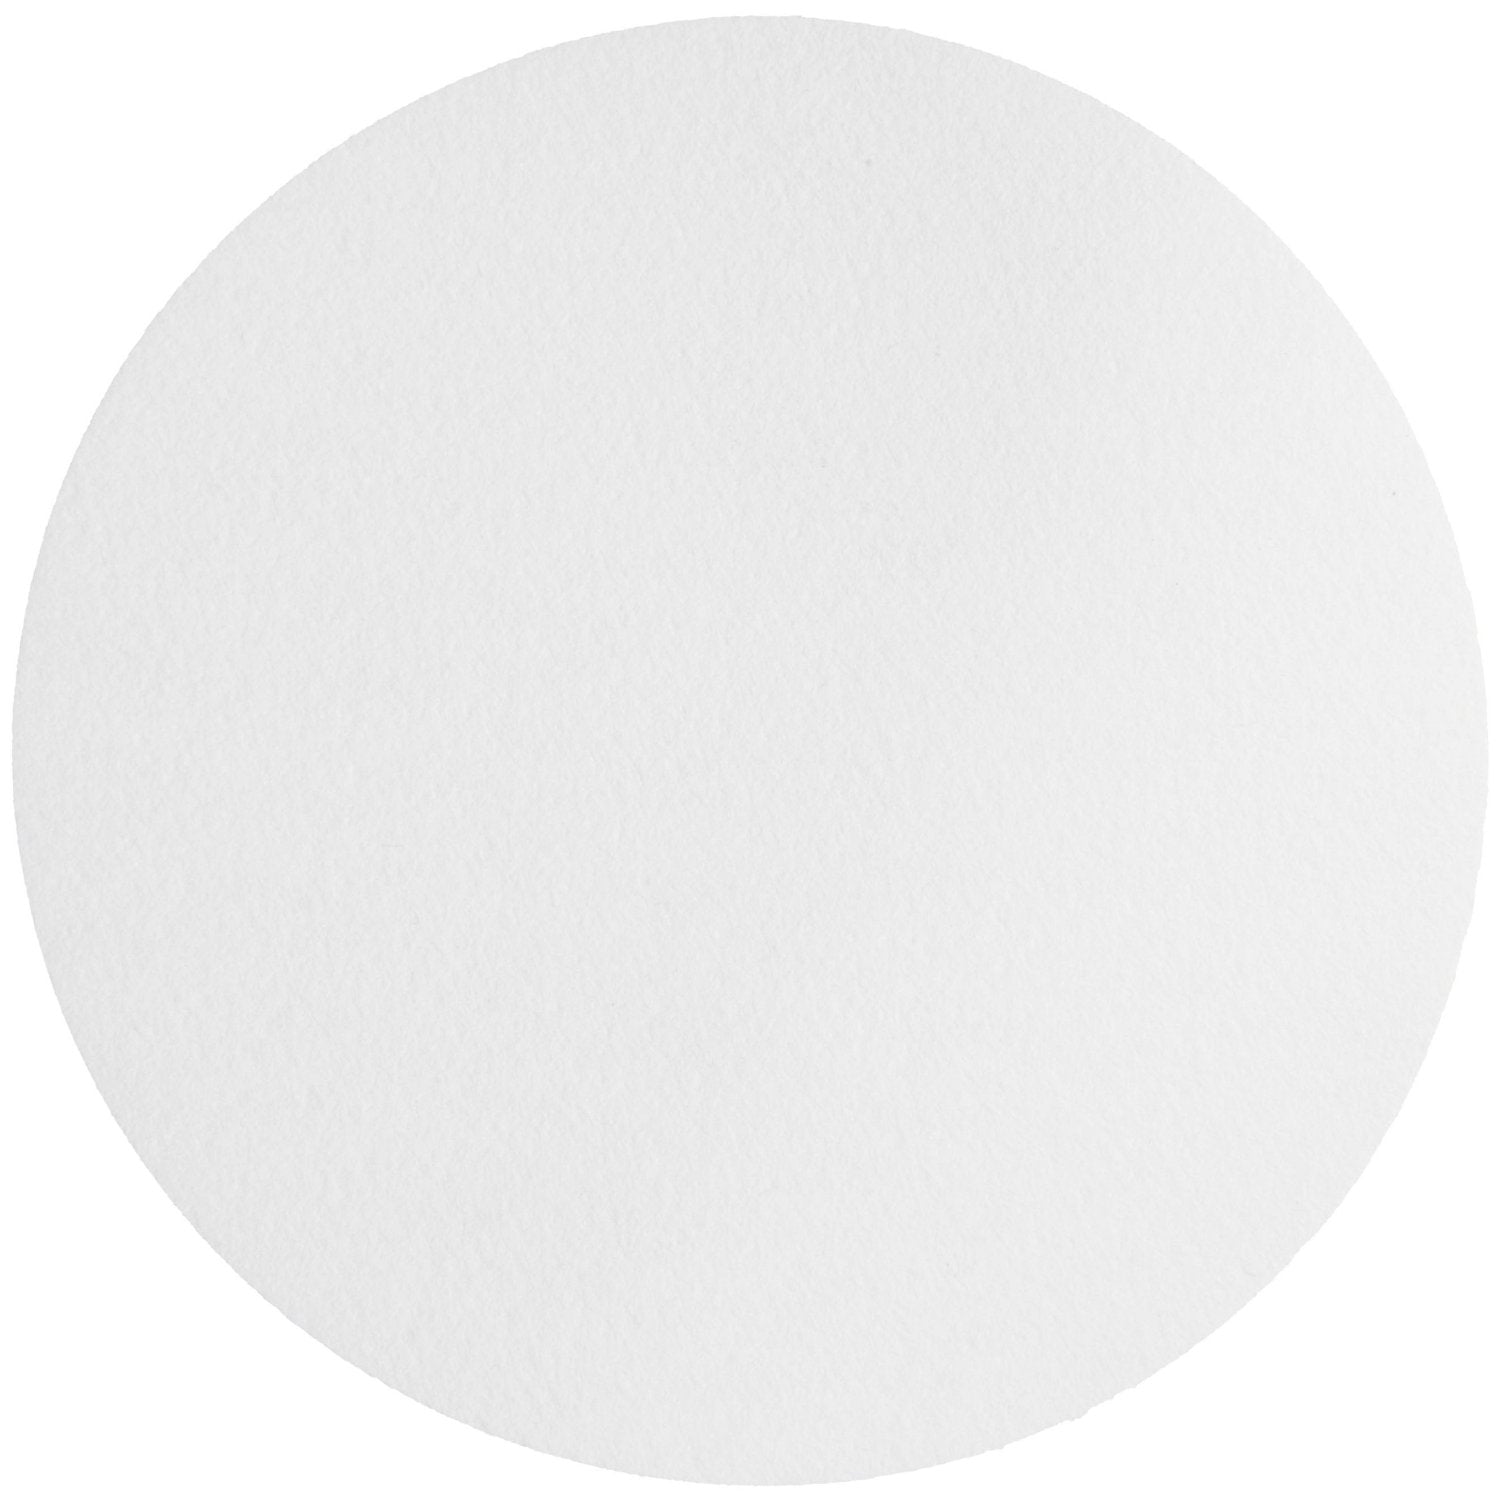 Whatman 7190-004 Cellulose Nitrate, 47mm Dia, 1.0 micrometer Pore Size, Plain White, 100/pk (PN: 7190-004)